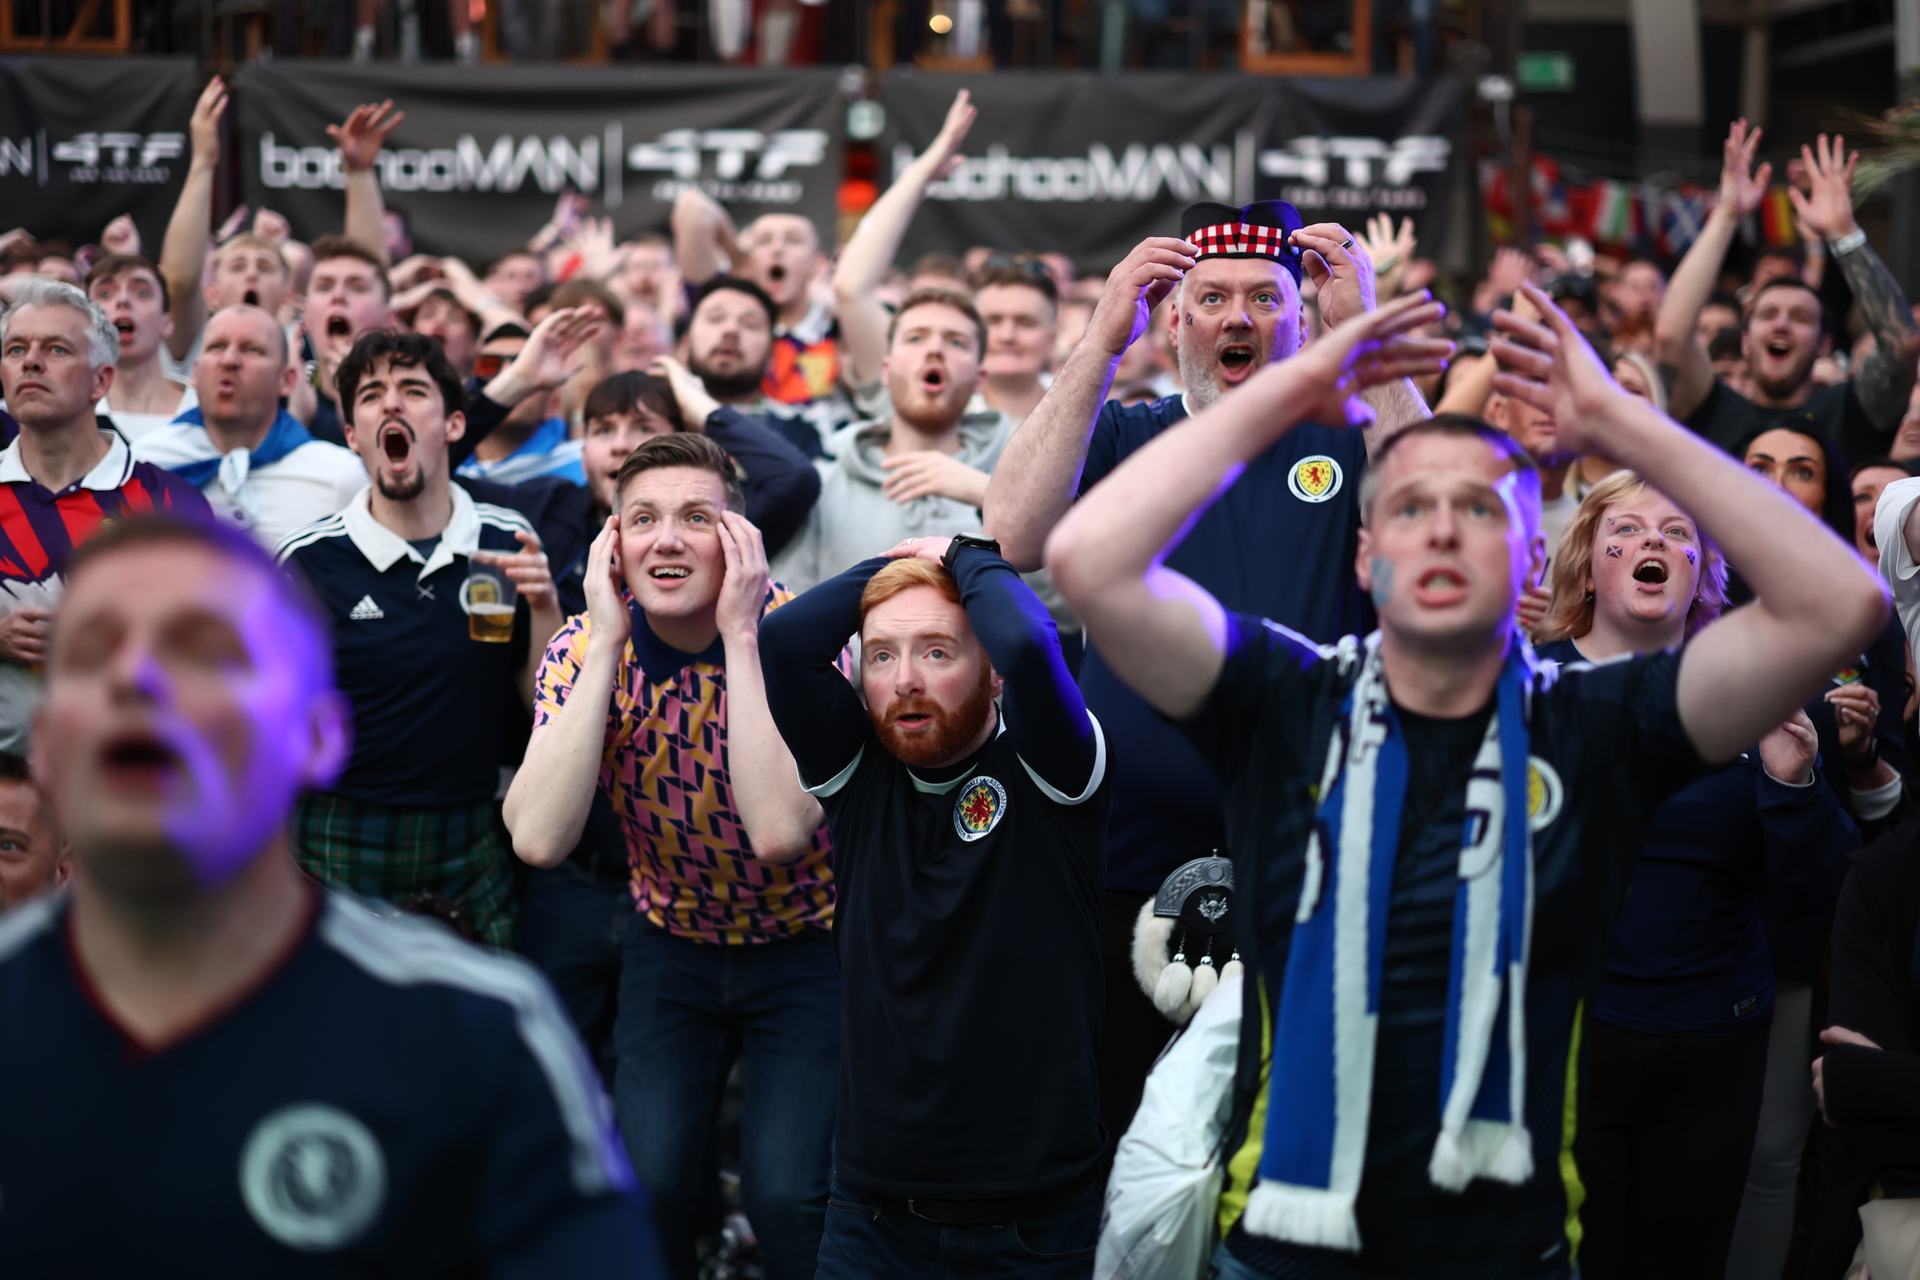 Scotland fans were tense at the Glasgow Fan Zone.